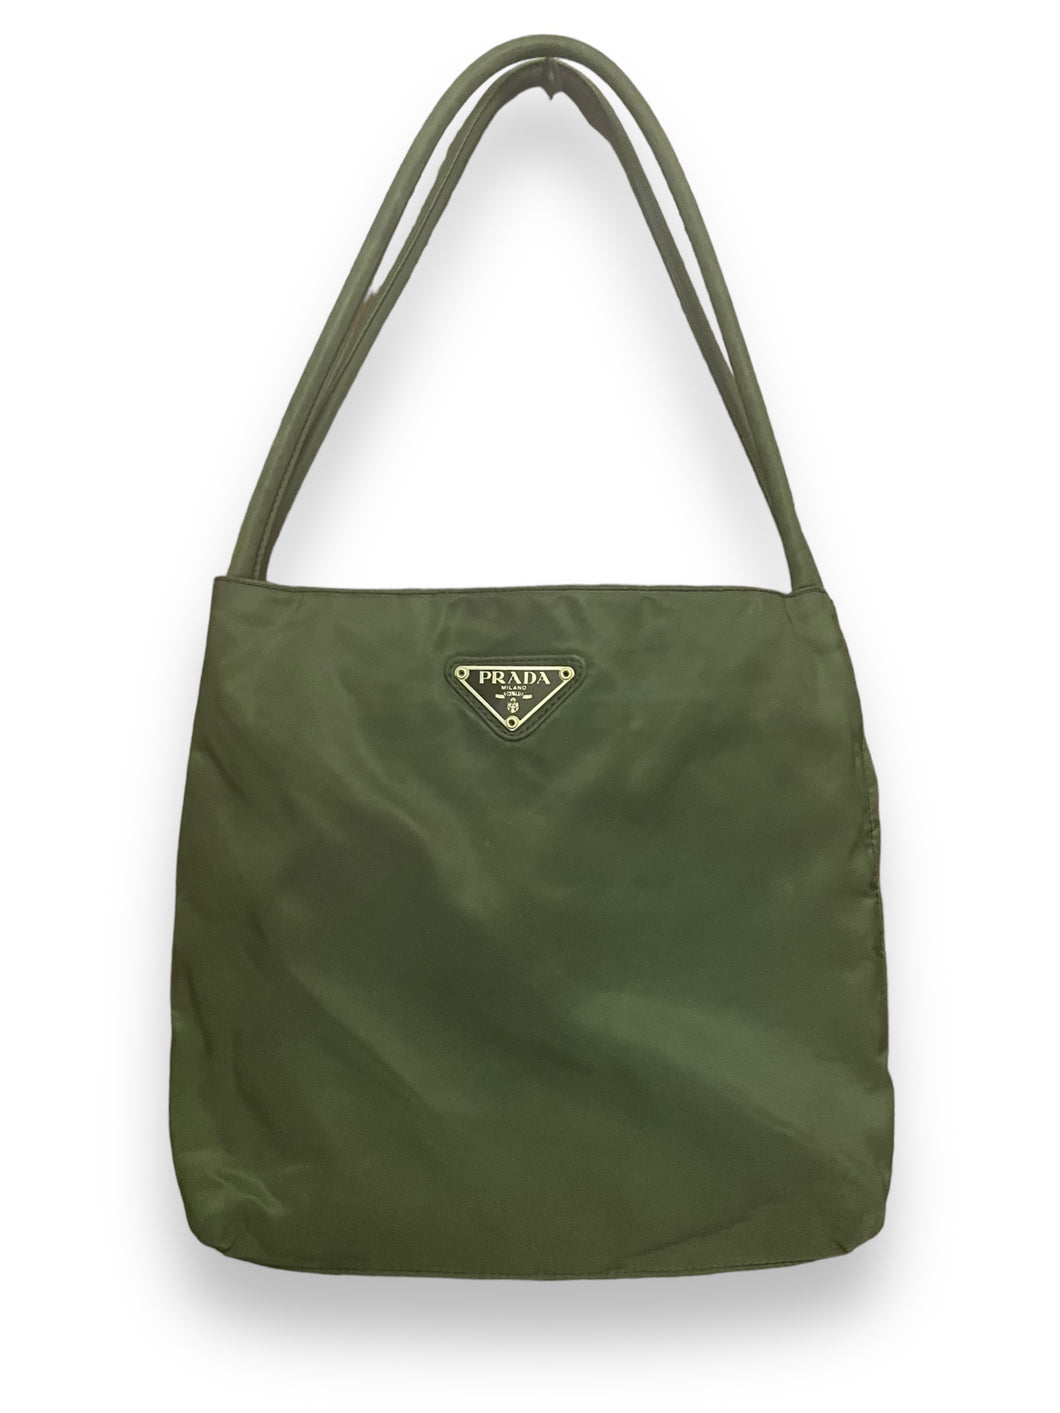 Prada nylon army green shoulder bag